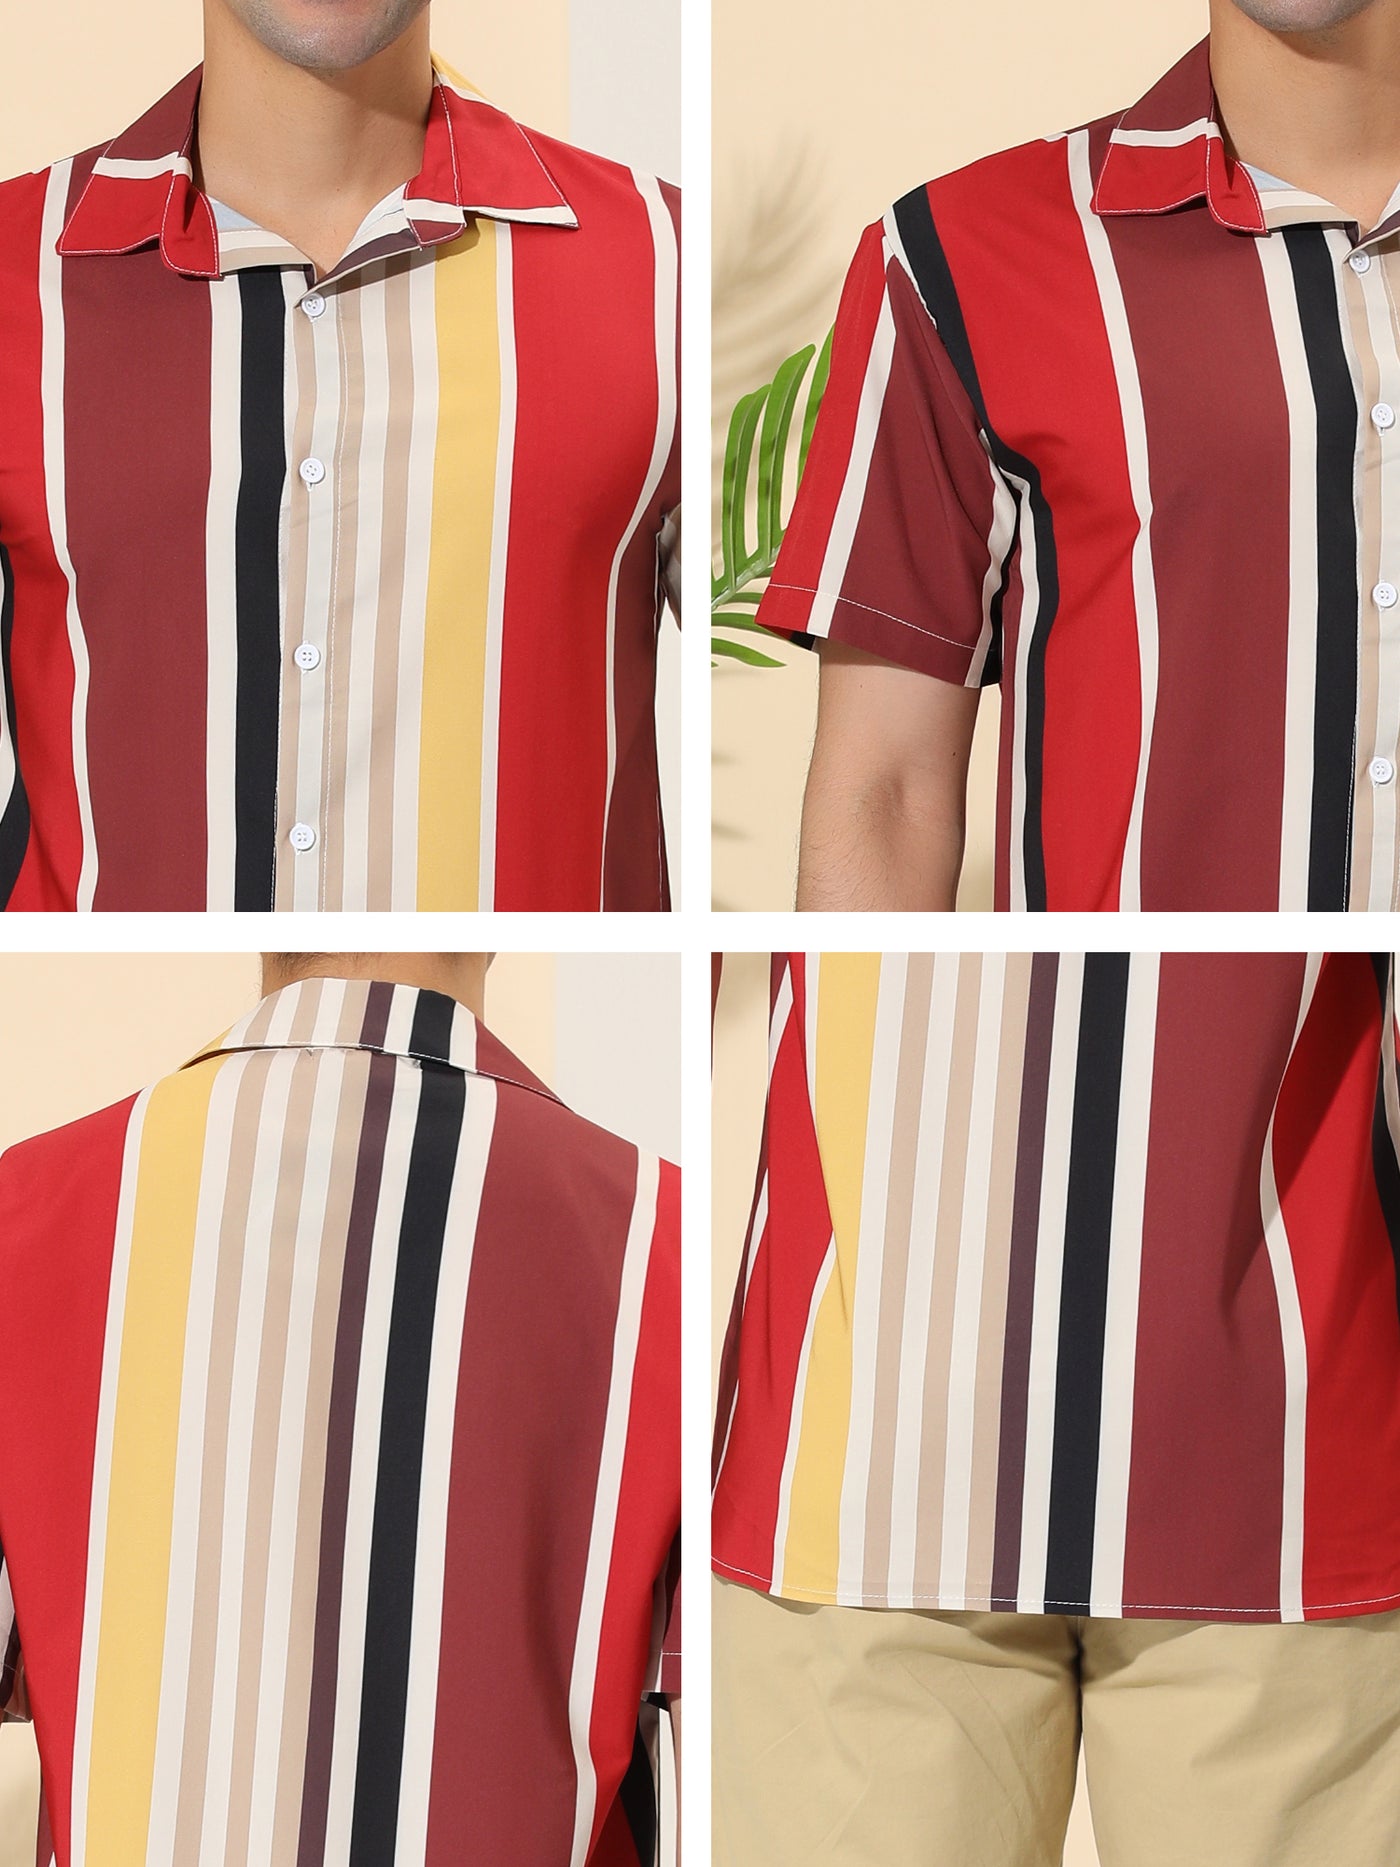 Bublédon Men's Summer Striped Shirt Short Sleeves Button Up Color Block Hawaiian Shirts